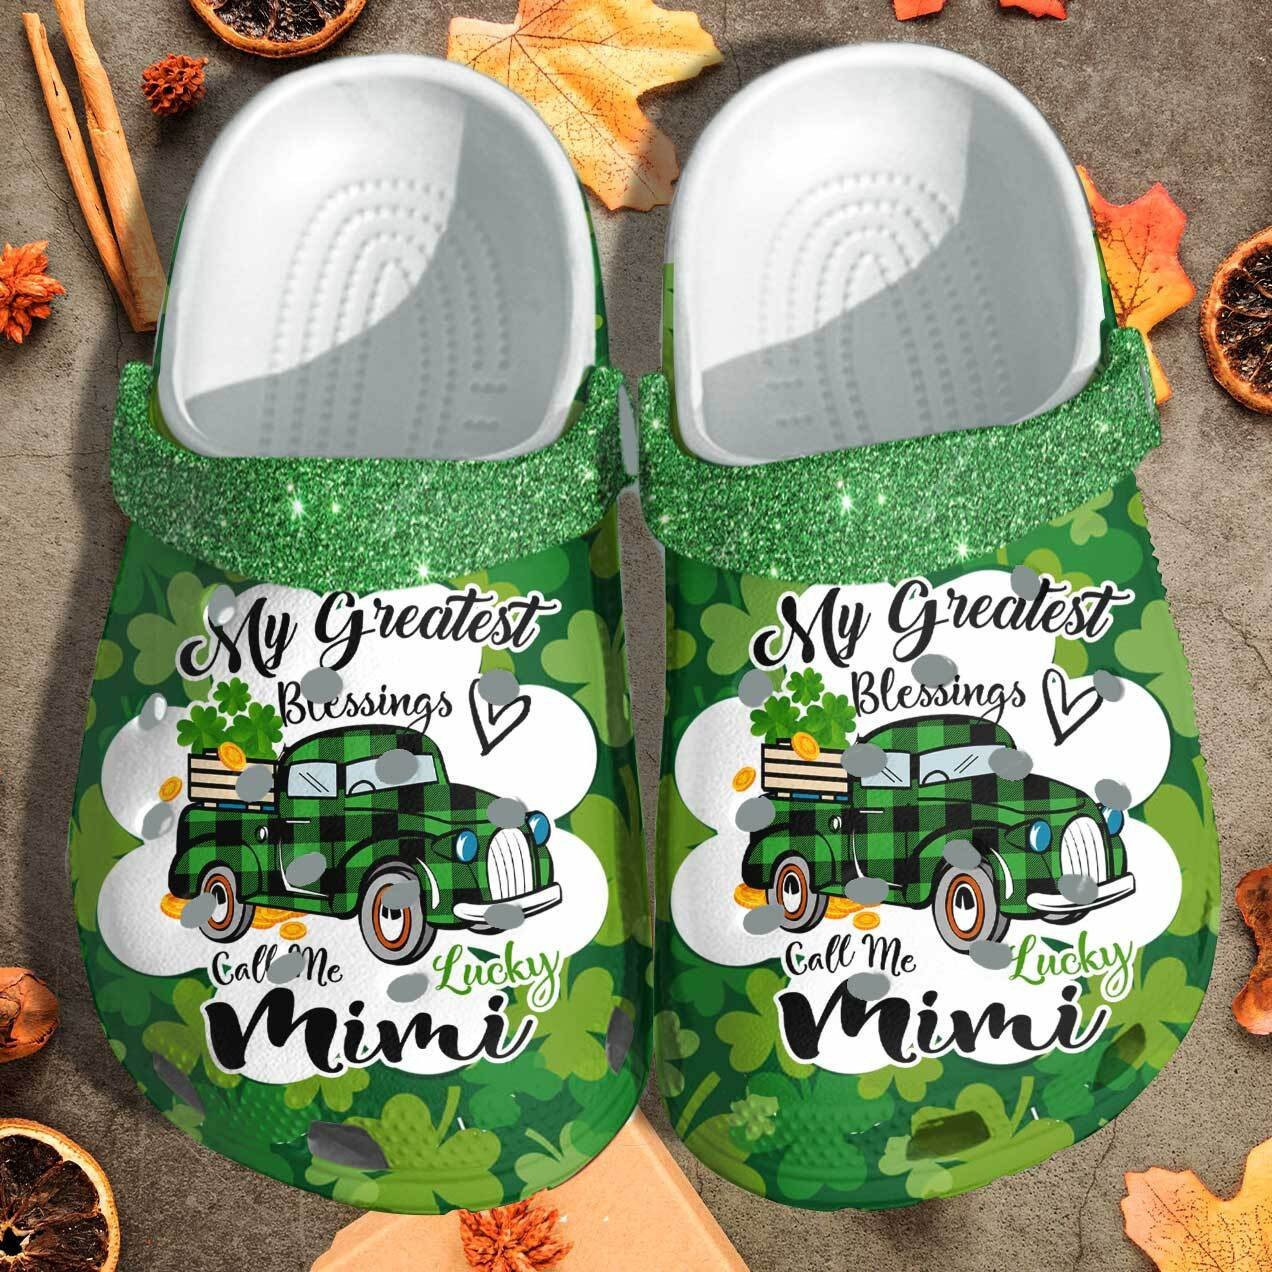 Lucky Mimi Blessings Patricks Day Crocs Shoes - Irish Crocs Shoes Merch 2022 clogs Gifts